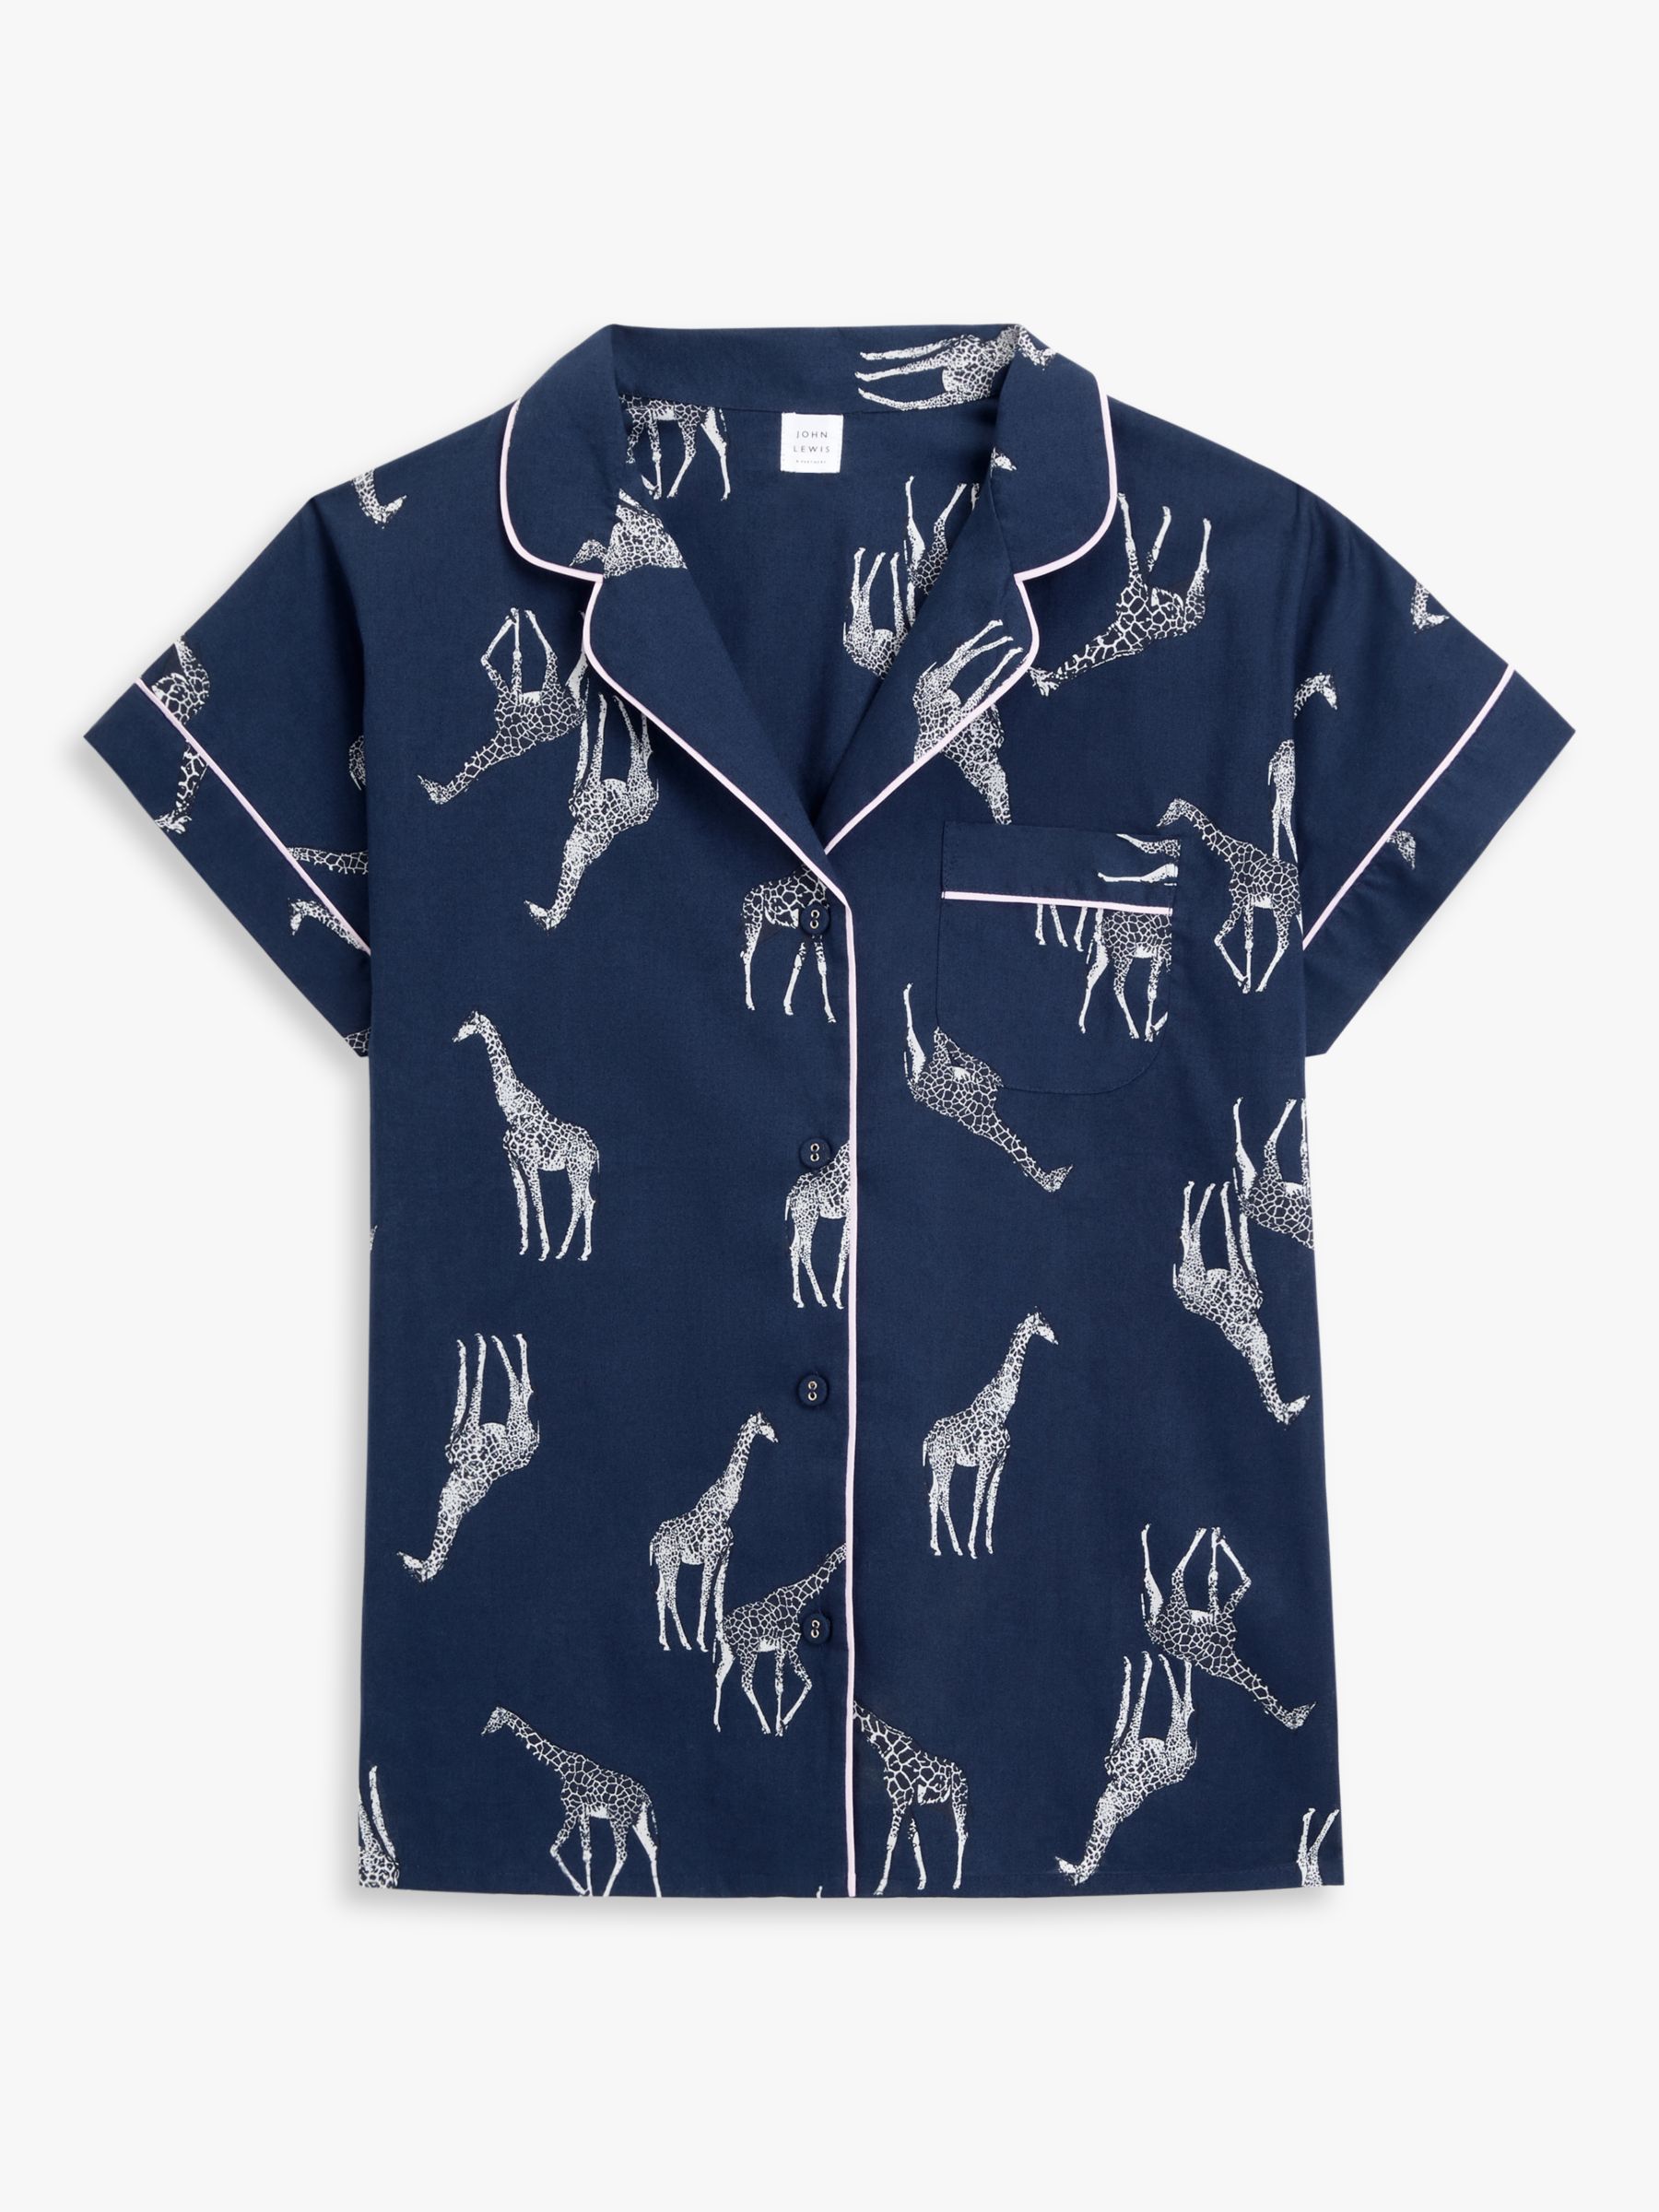 louis vuitton shirt with giraffe